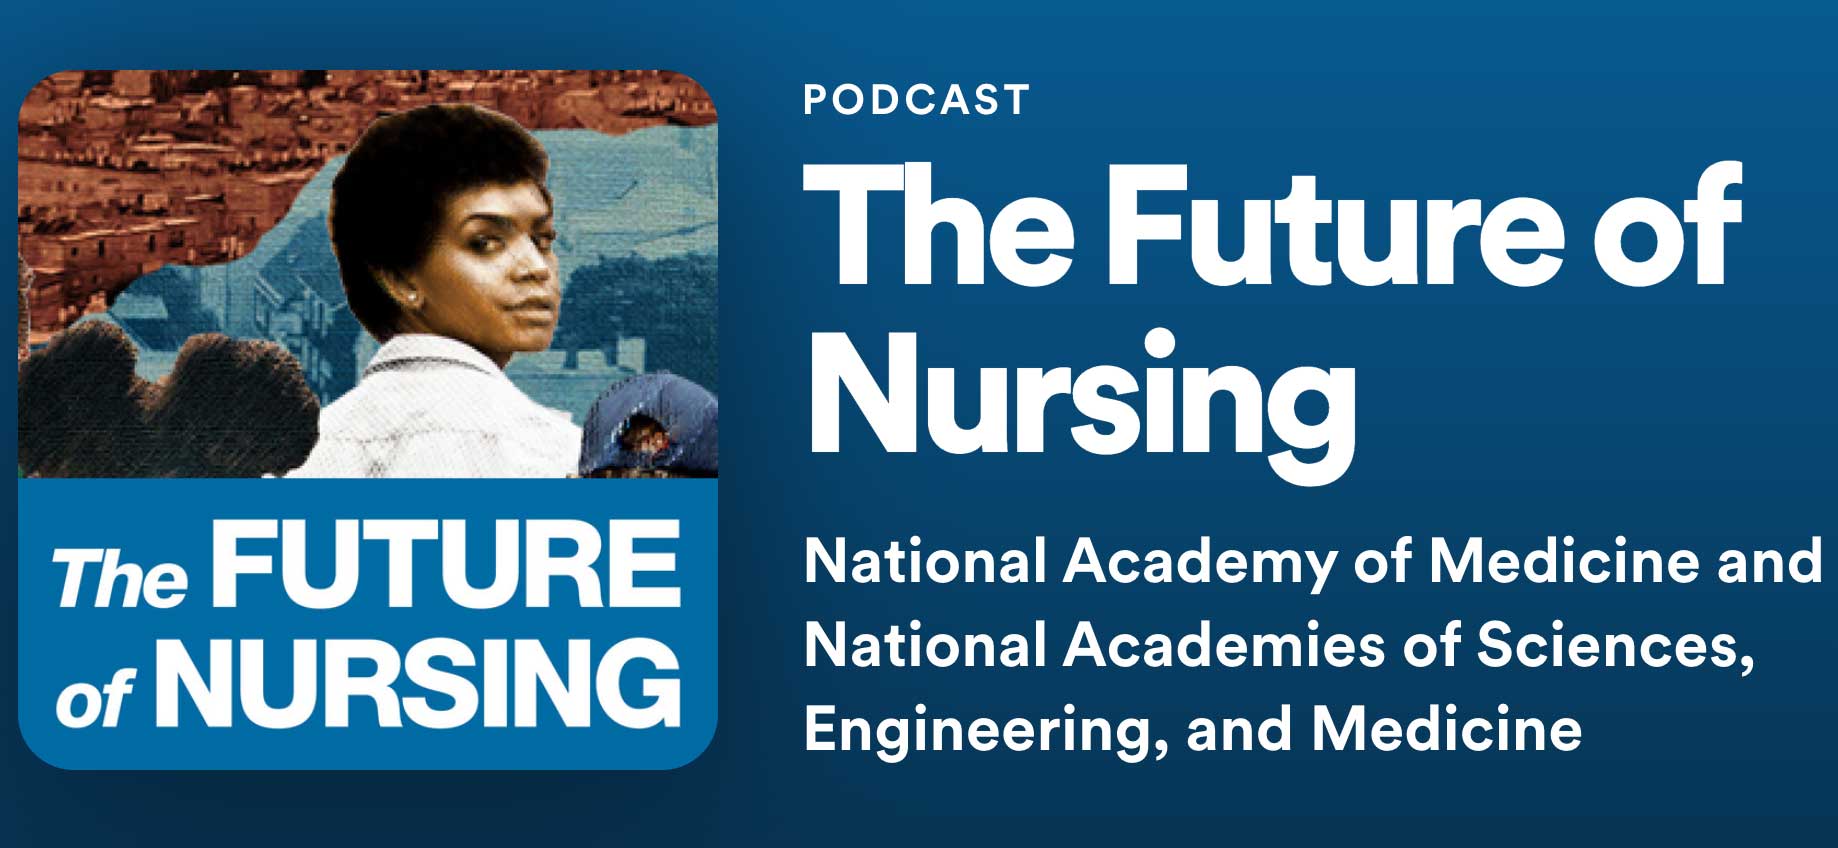 Lawson-Future-of-Nursing-Podcast